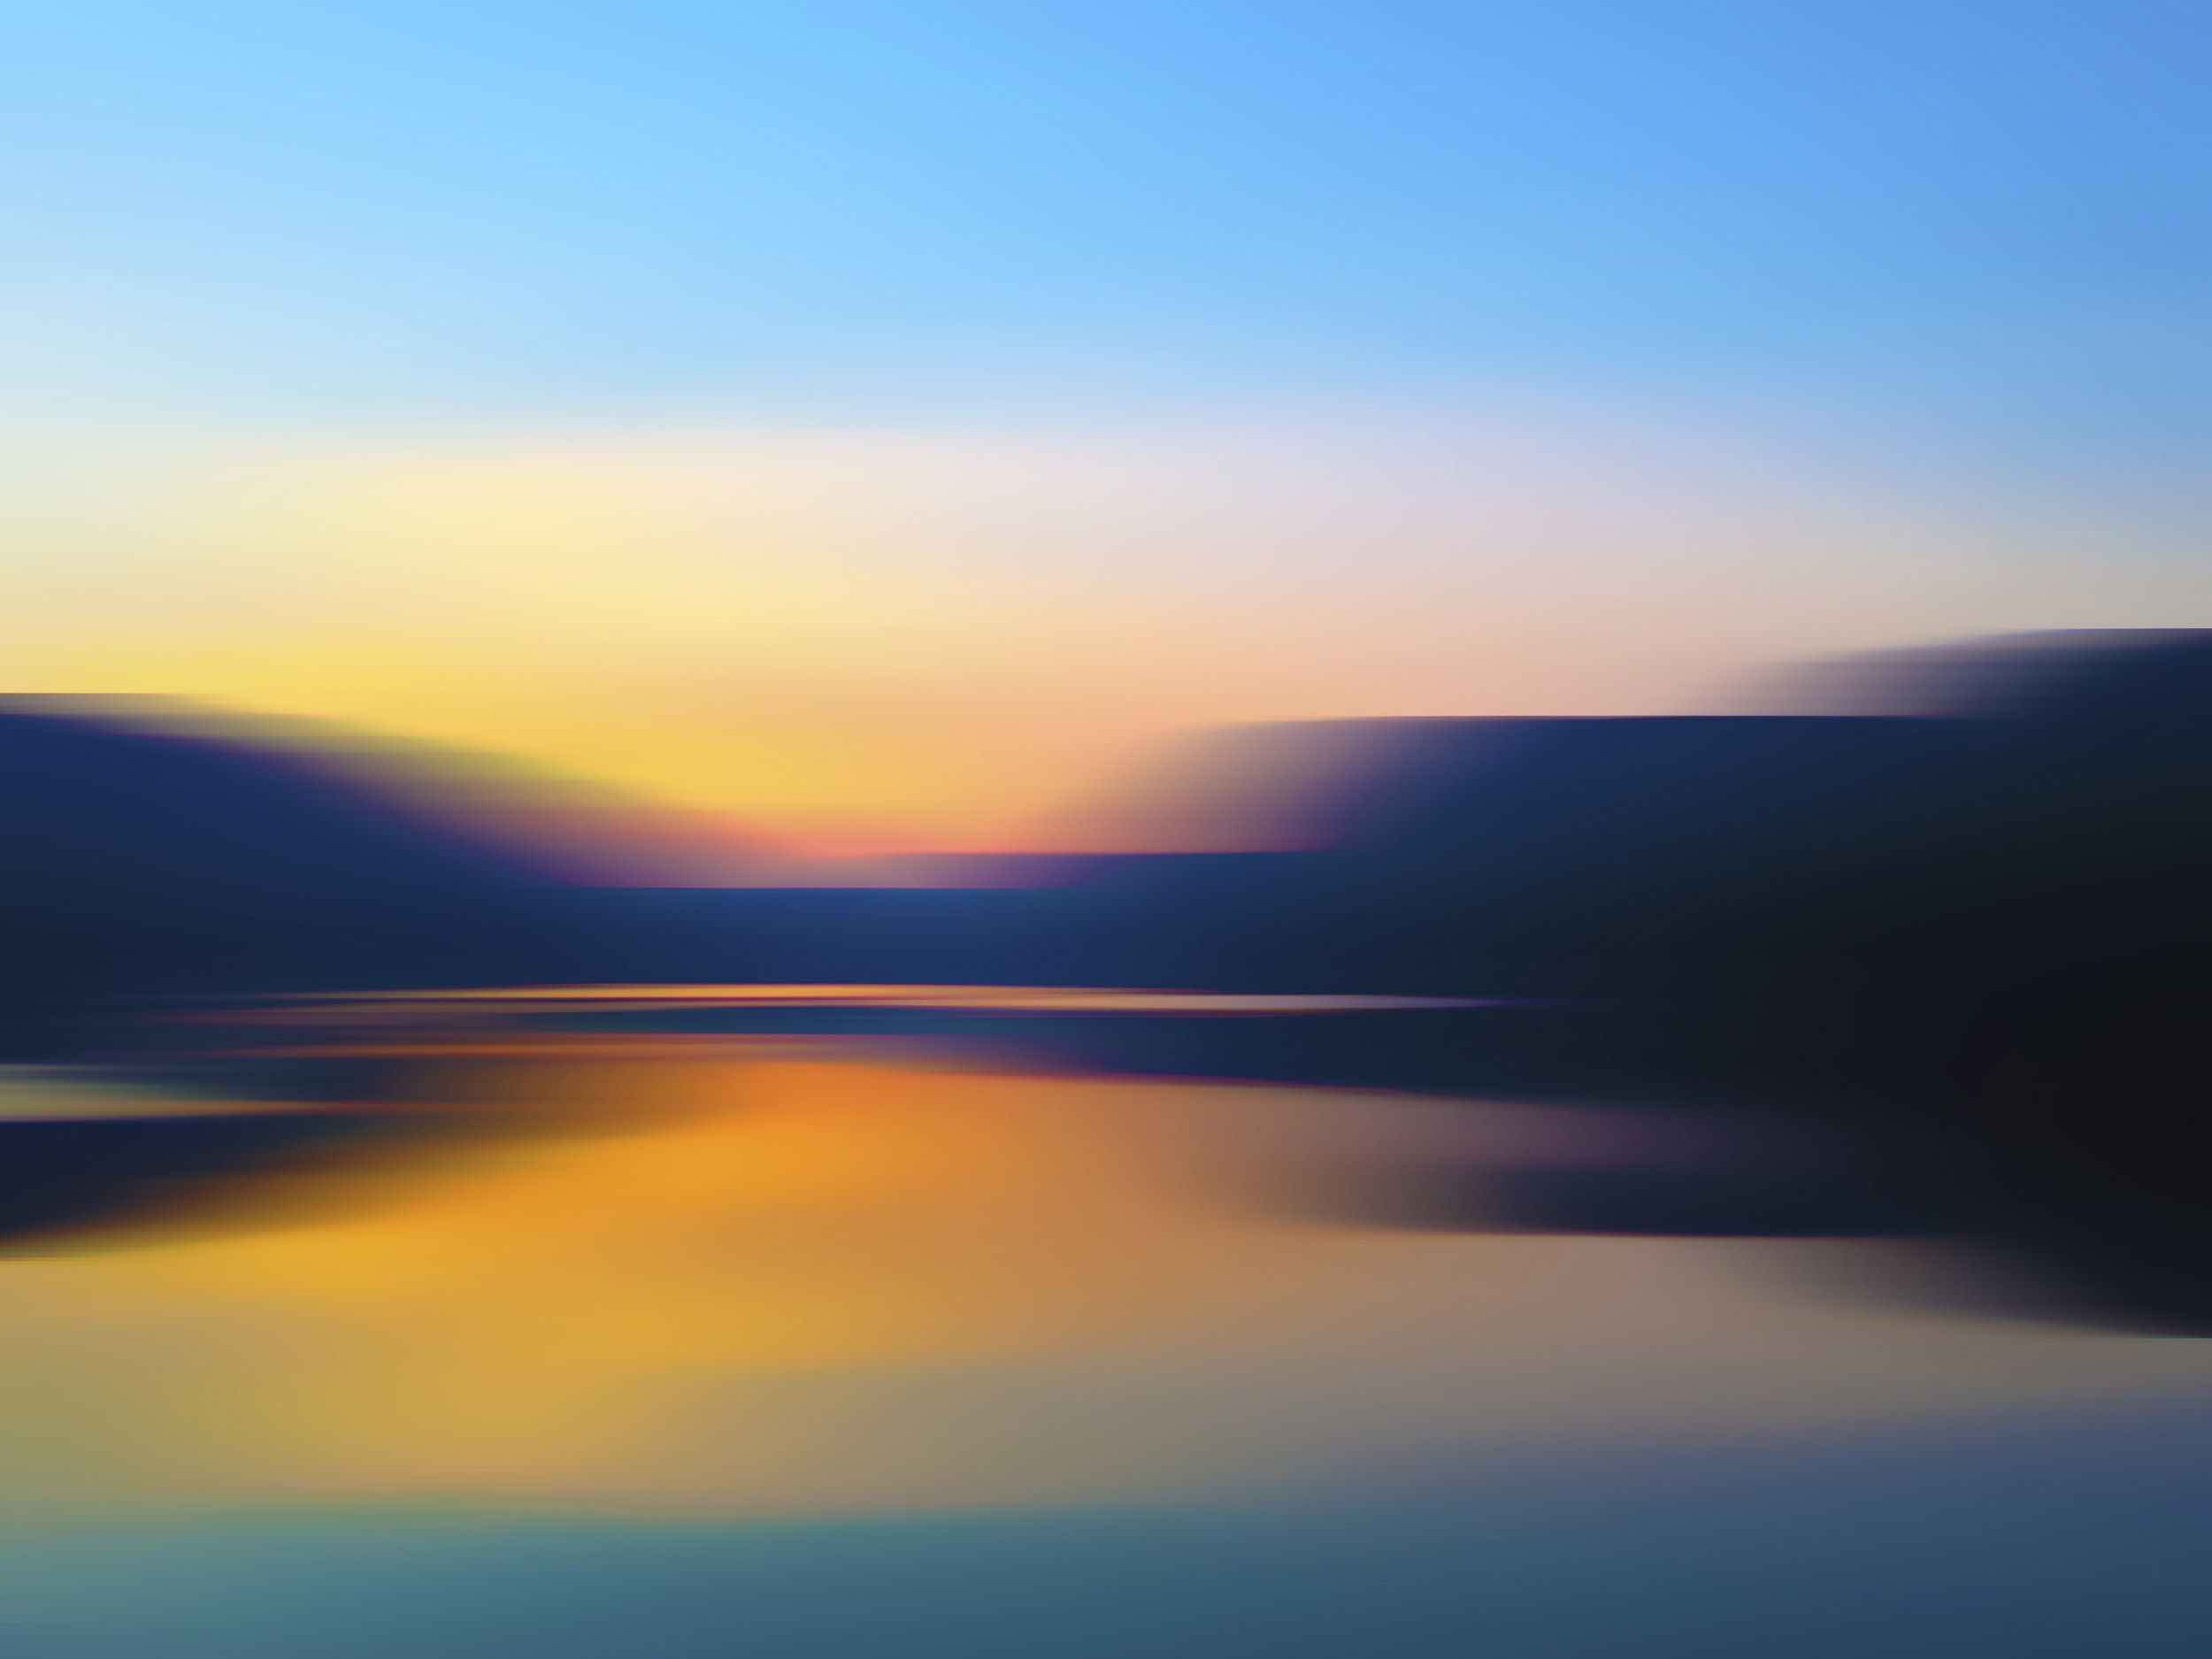   Sunset on Reservoir  2015 Digital Image 